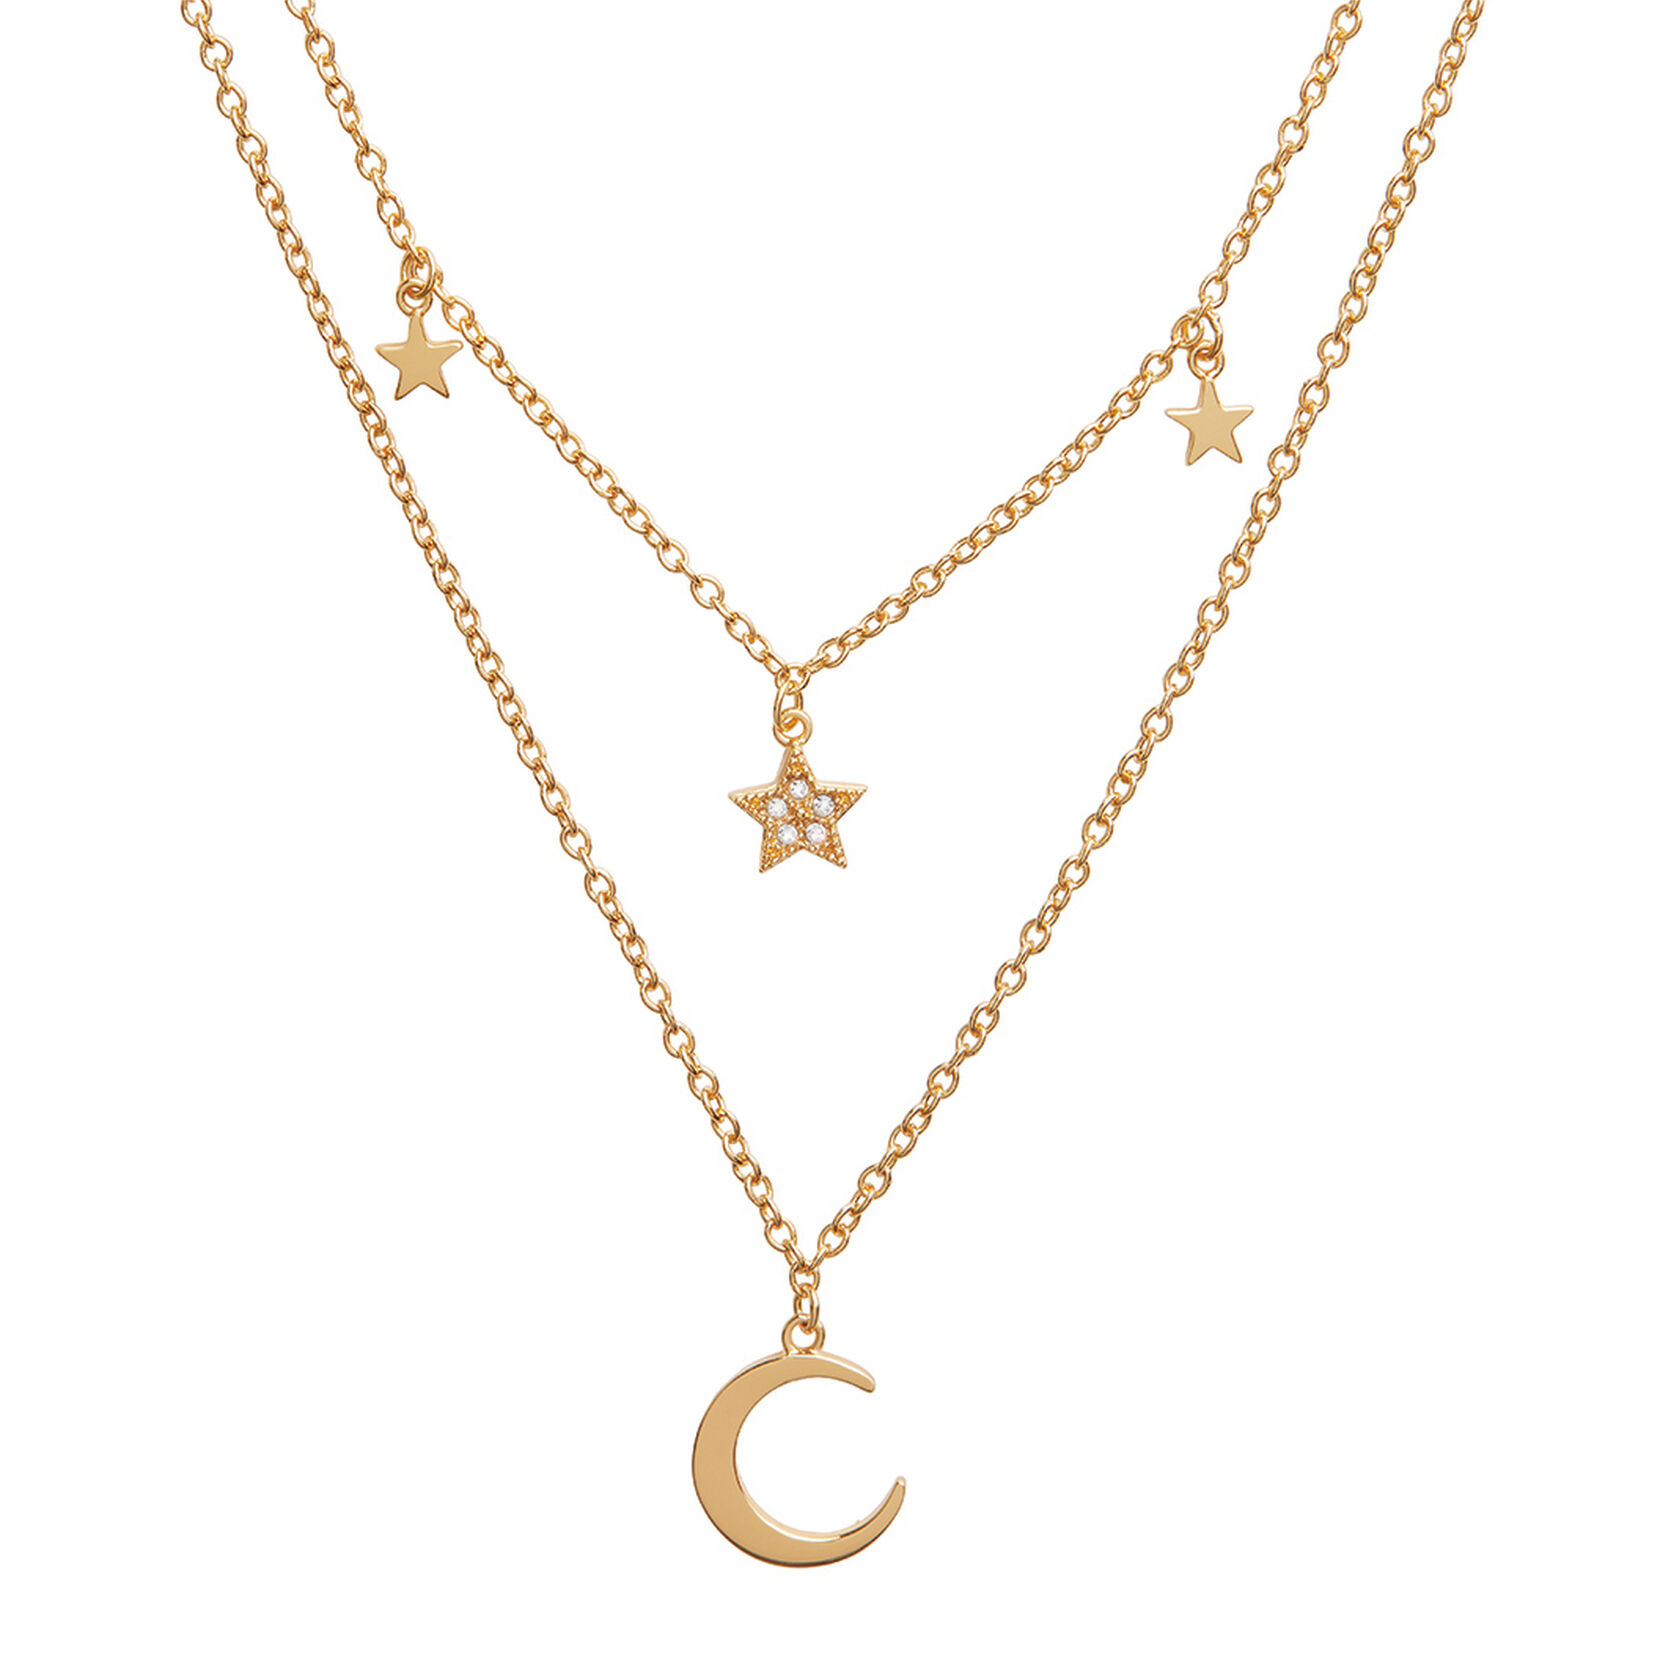 Celestial Gold Moon & Star Double Chain Necklace | Olivia Burton London